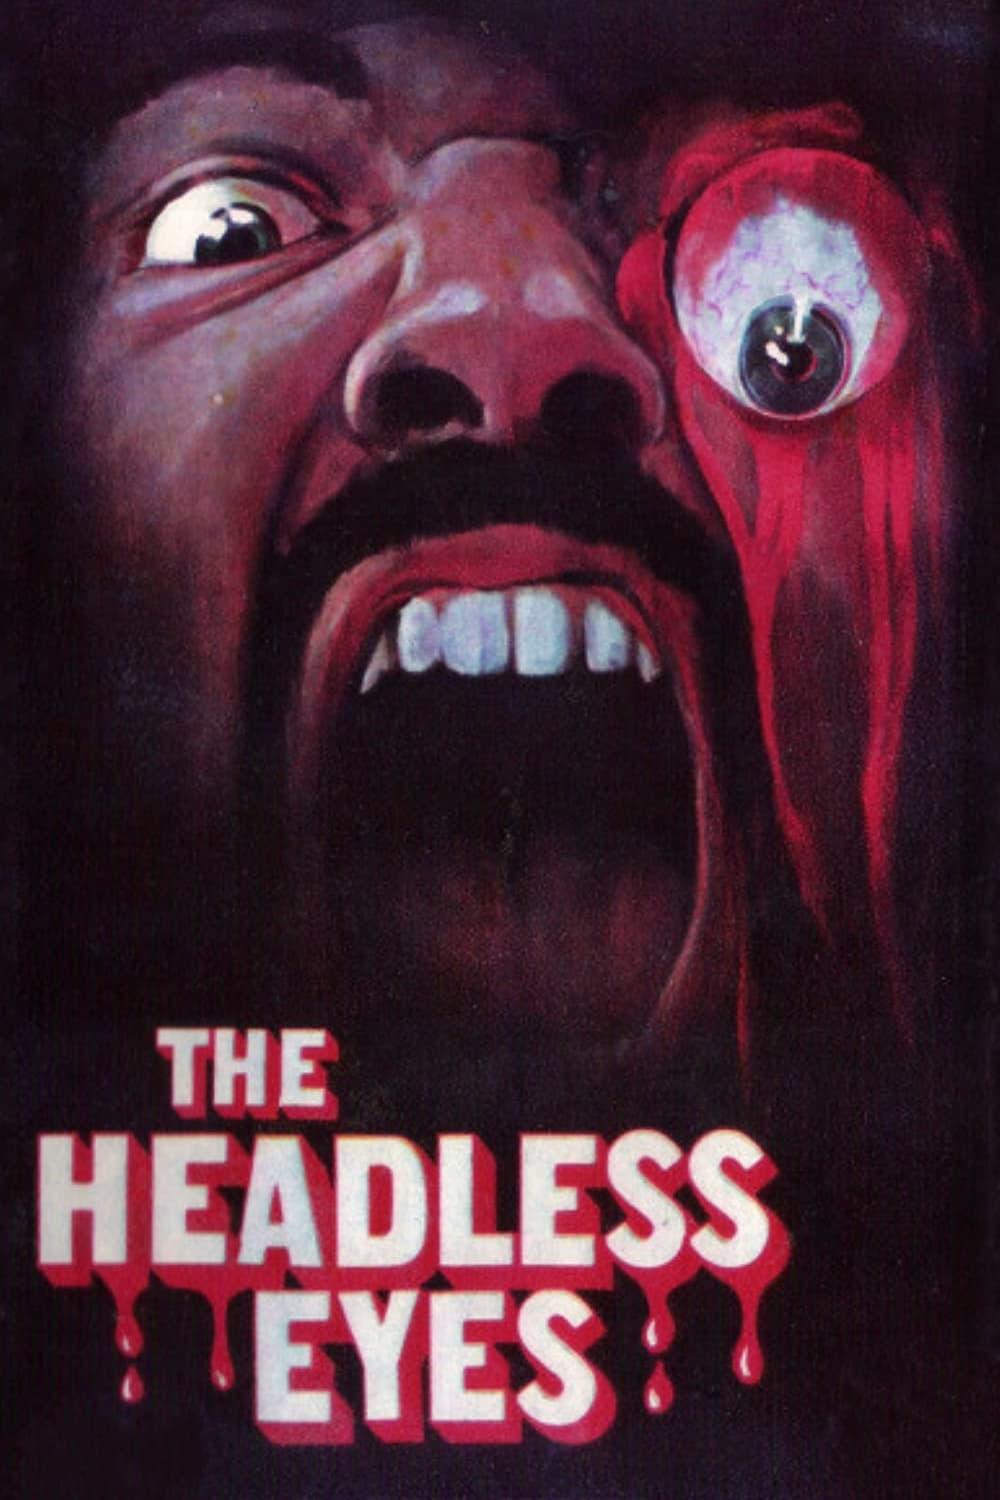 The Headless Eyes poster